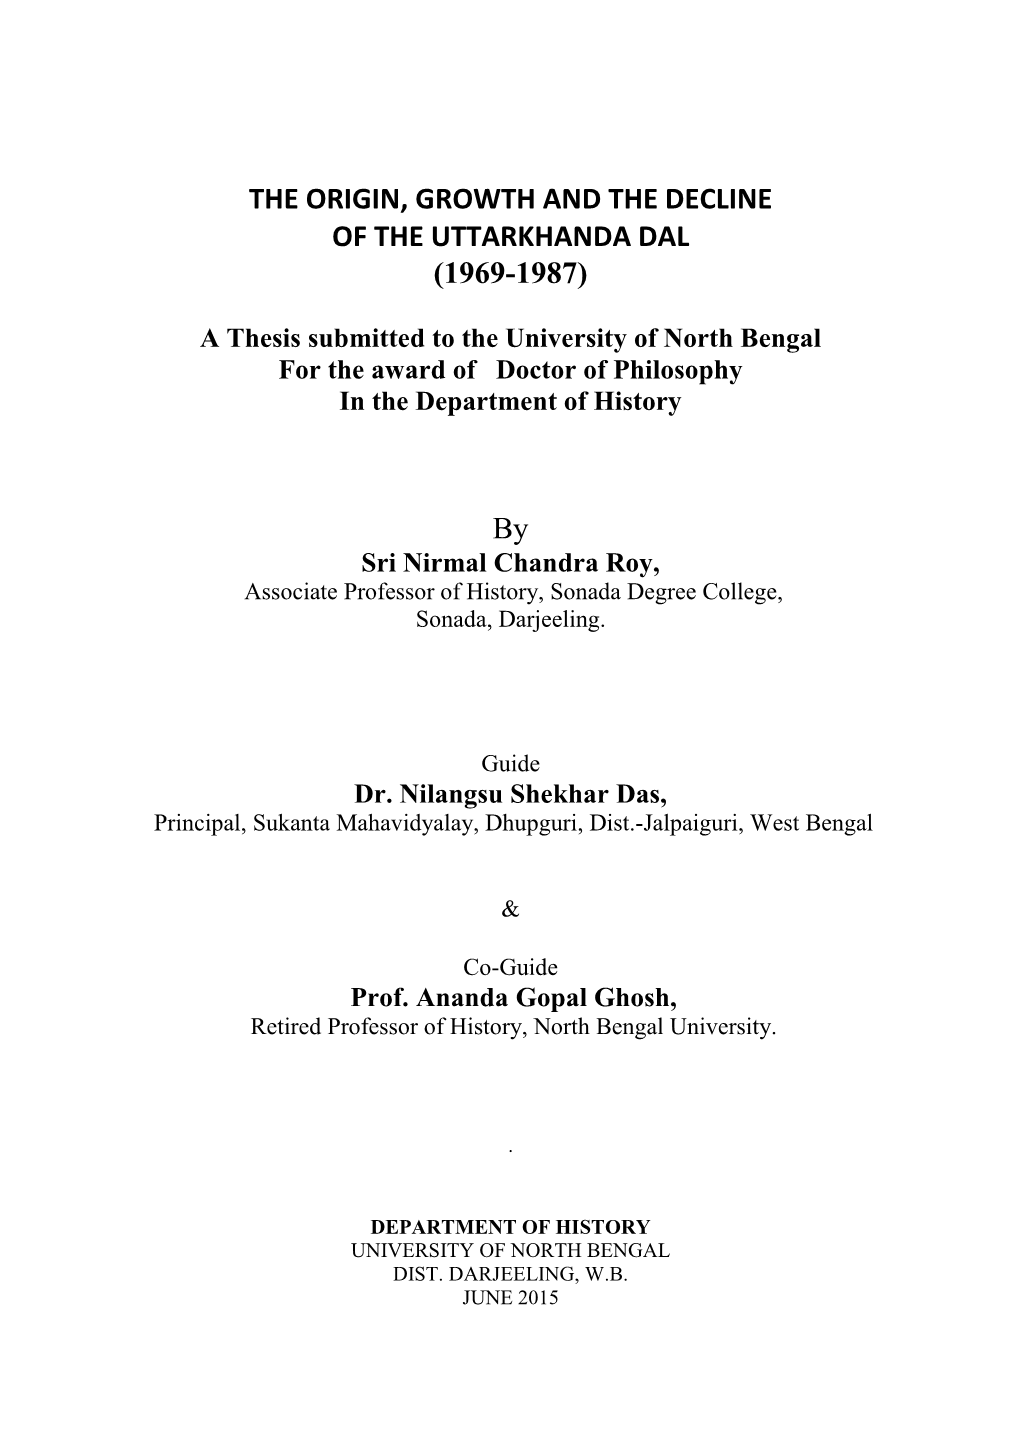 Sri Nirmal Chandra Roy, Associate Professor of History, Sonada Degree College, Sonada, Darjeeling